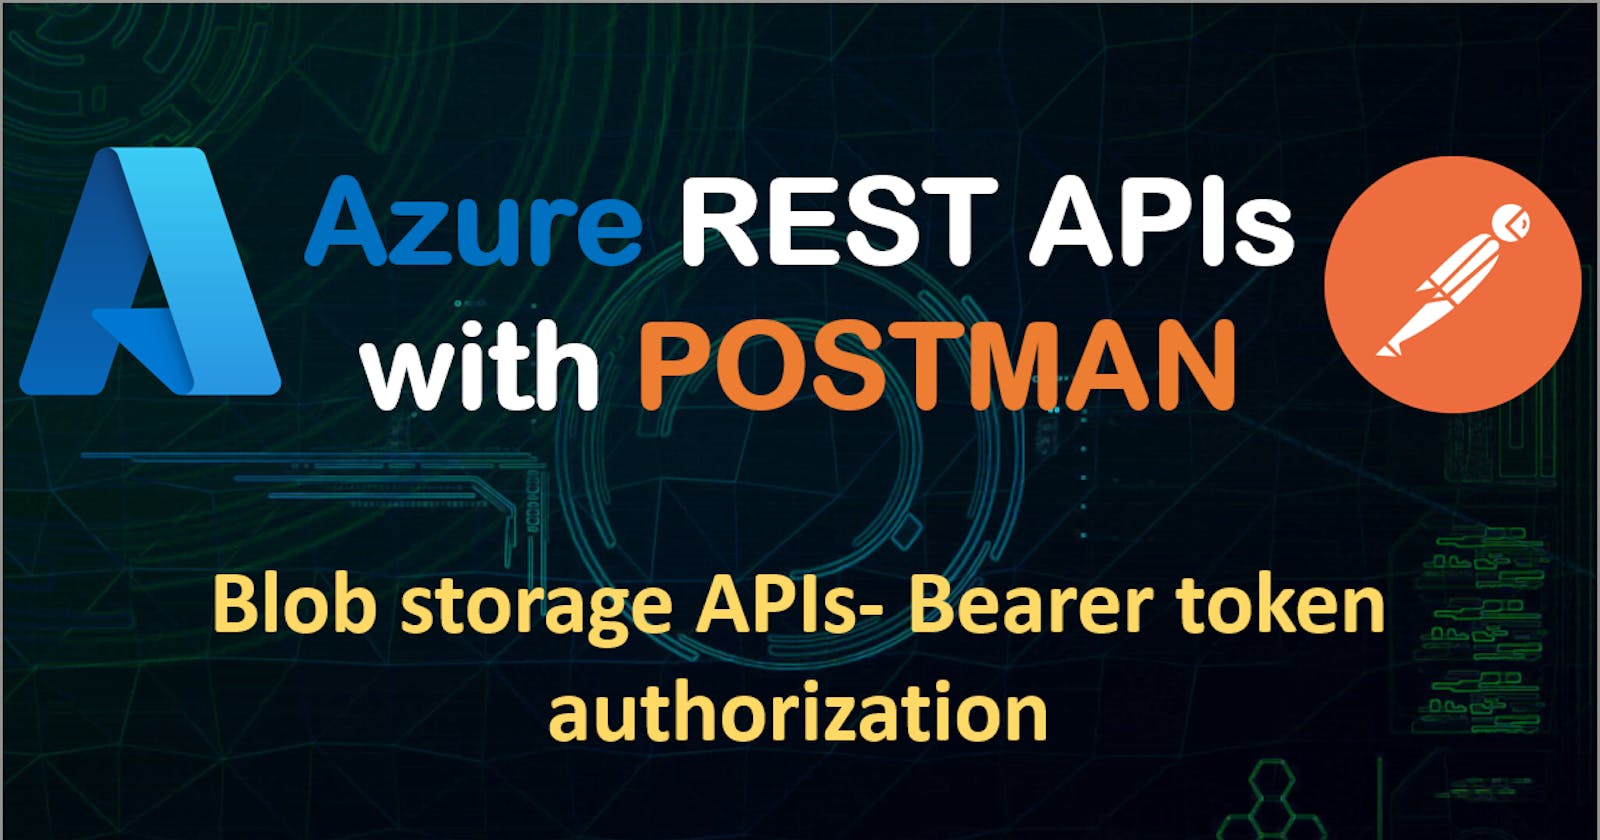 Azure blob storage - upload blob using REST API and bearer token in Postman